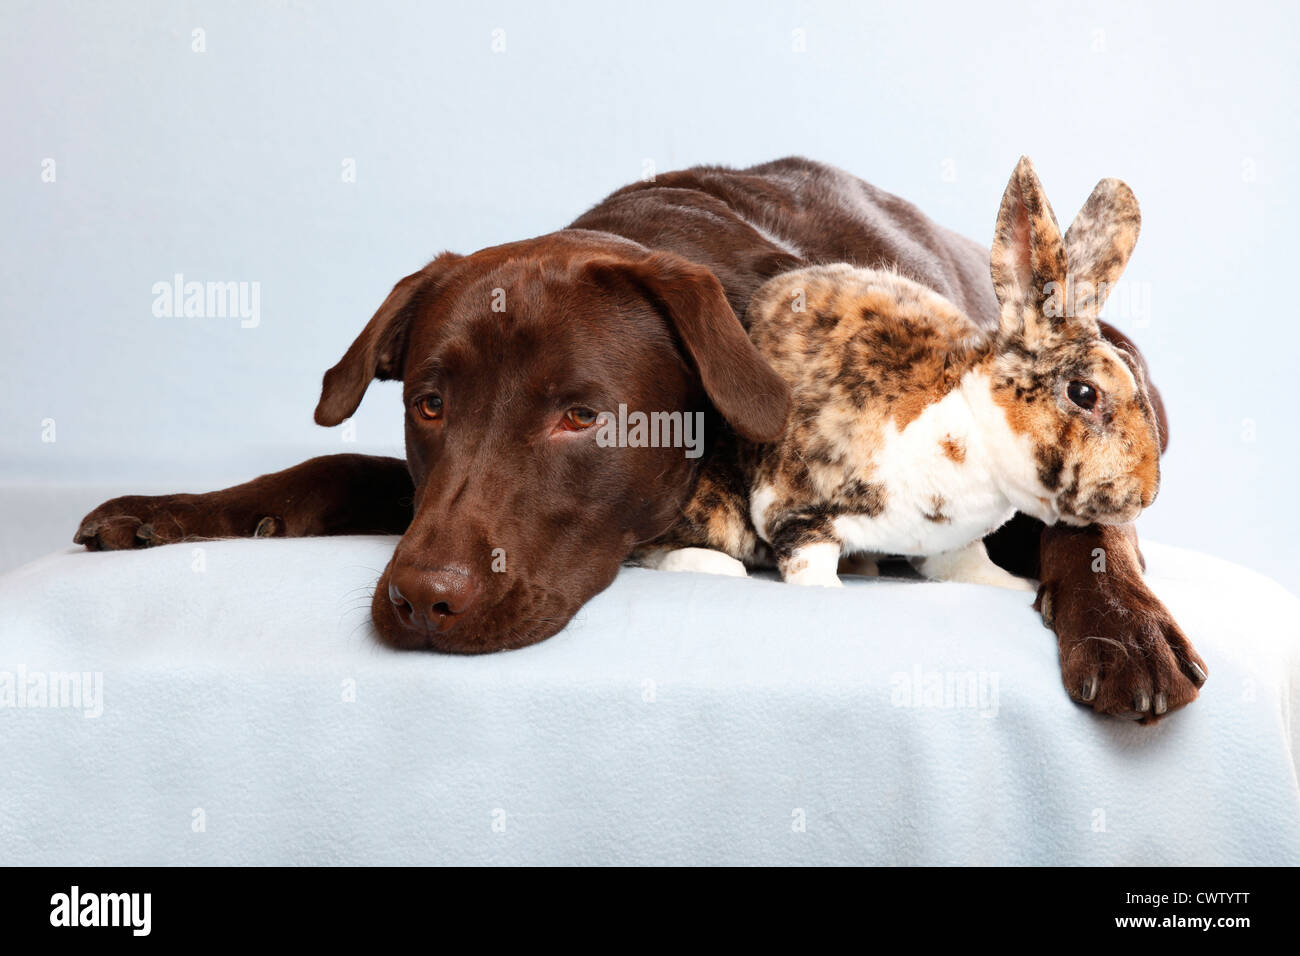 Il Labrador mit Klein-Rex / Labrador con bunny Foto Stock